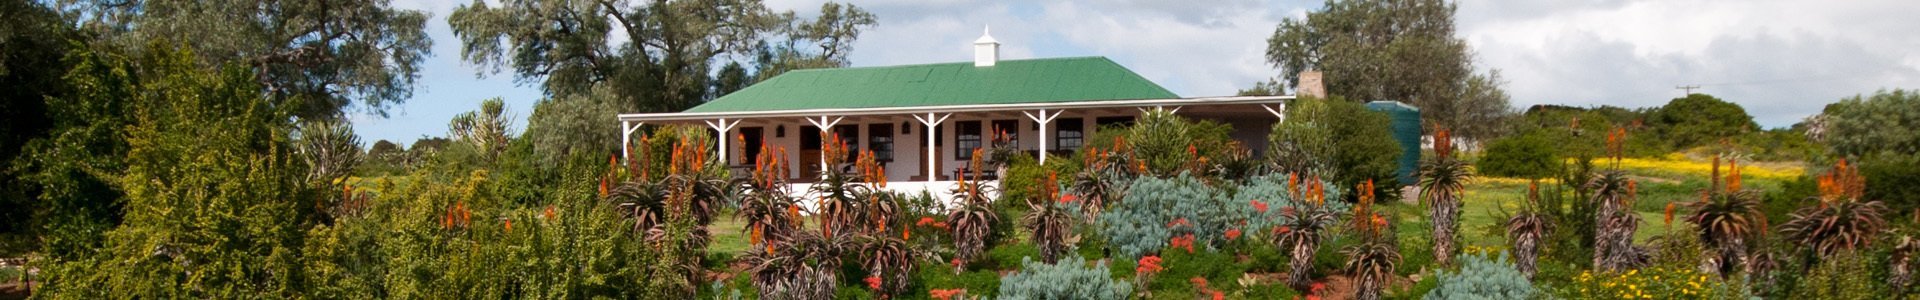 Amakhala Game Lodge Leeuwenbosch Country House Main Lodge Garden